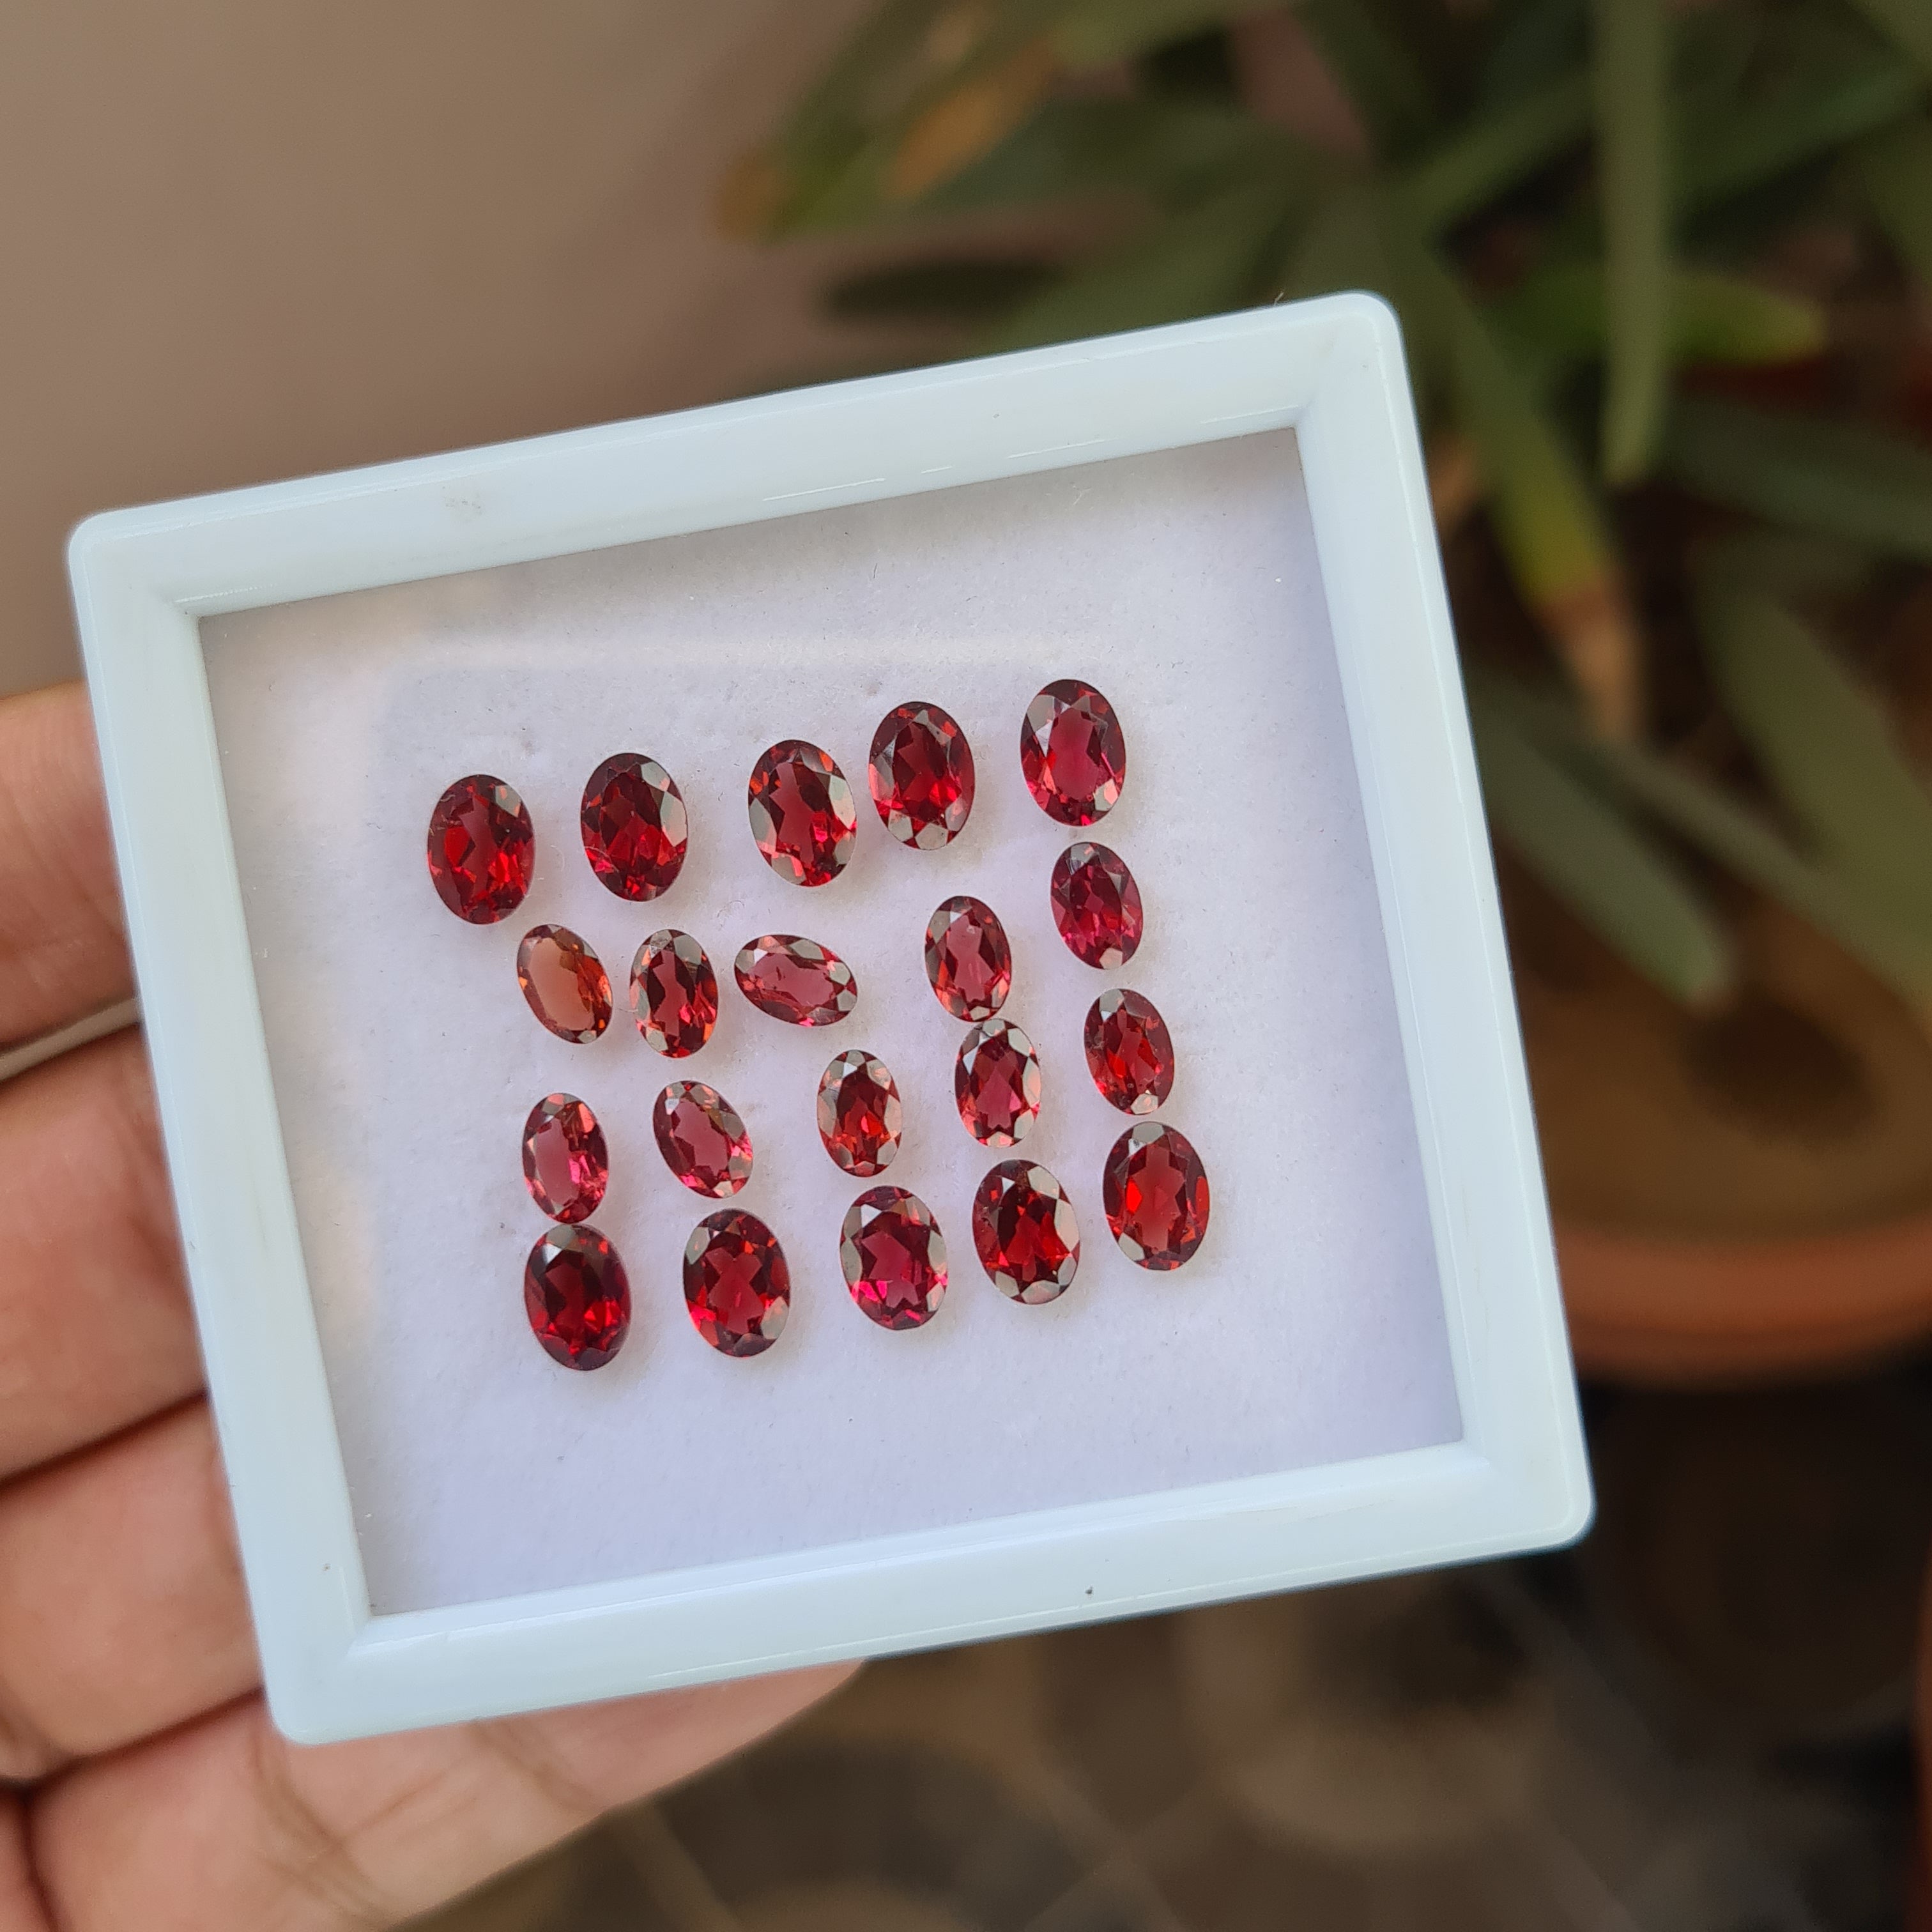 20 Pieces Natural Garnet Faceted Gemstones Oval Shape , Size: 6-7mm - The LabradoriteKing